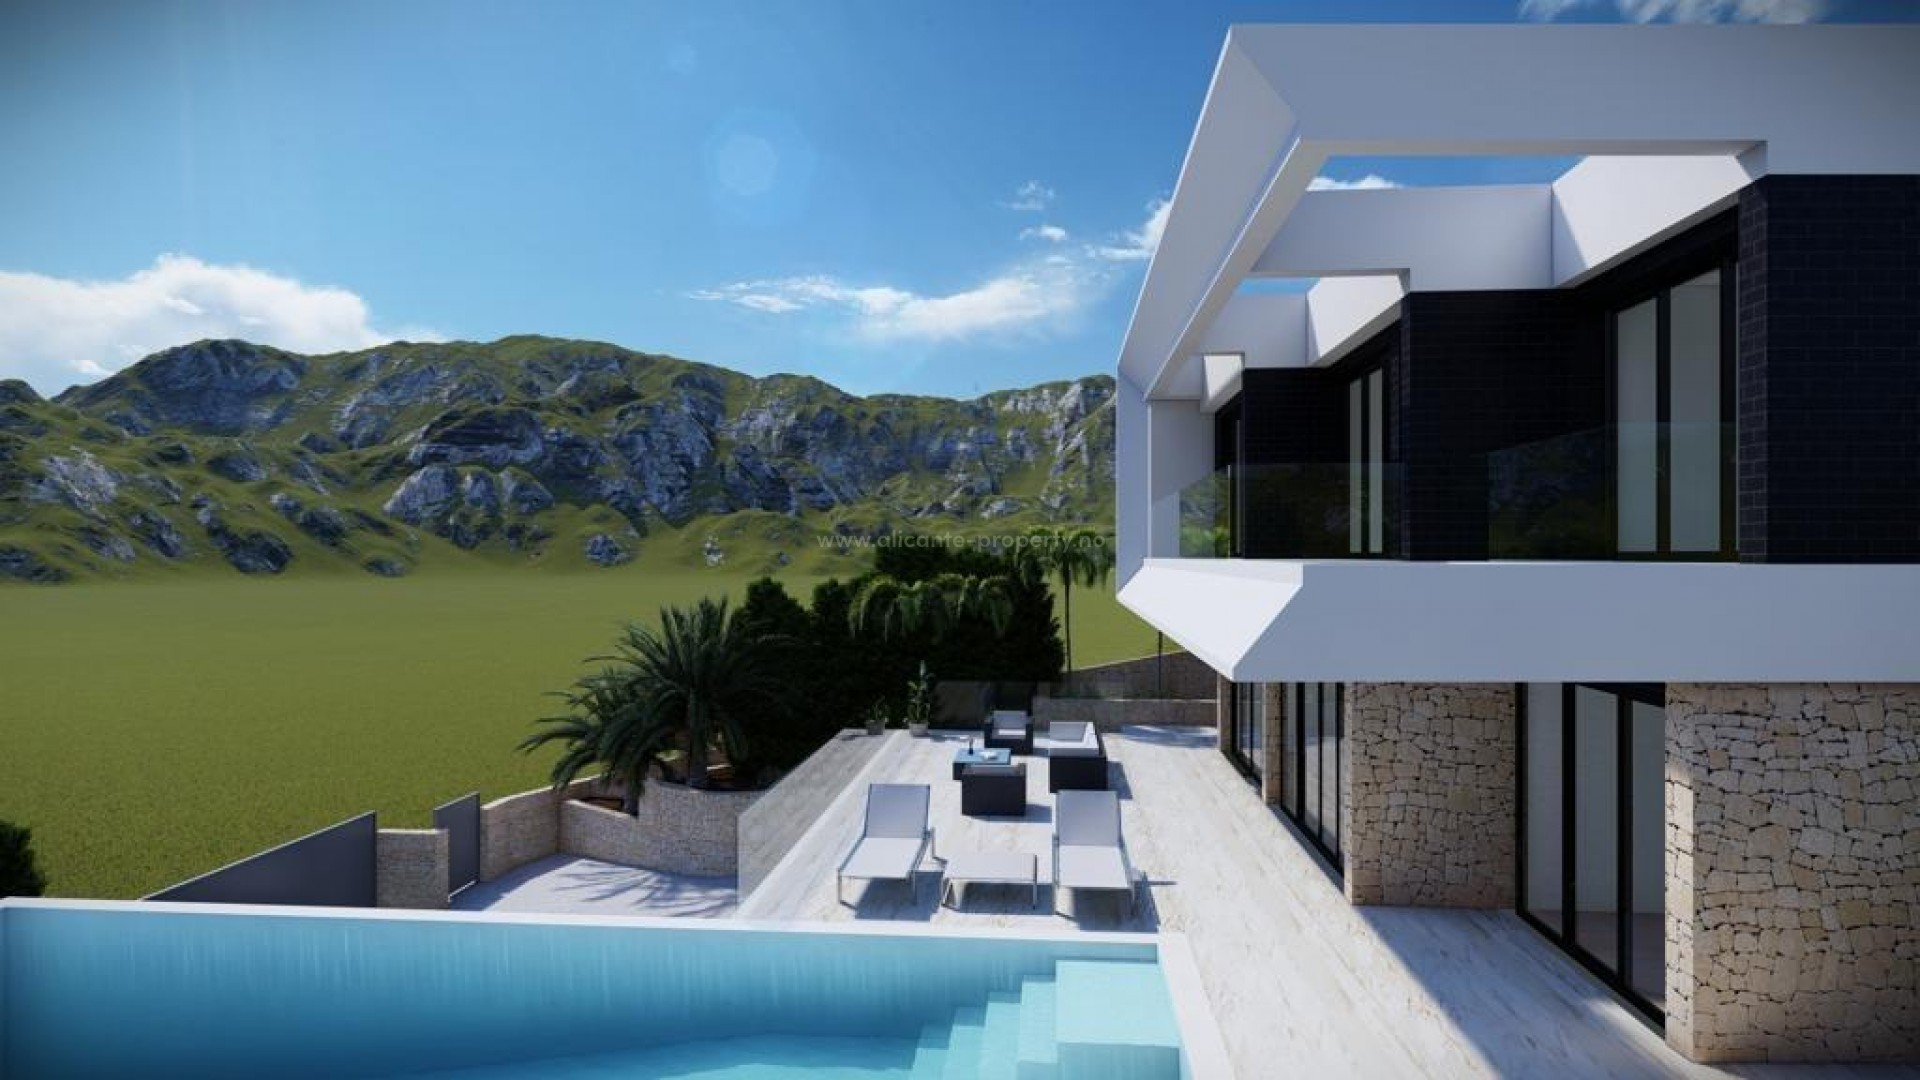 Luksusvilla i Altea Hills, 4 soverom, 5 bad, boareal på 330 m2, evighetsbasseng med saltvannsanlegg, kan tilpasset ønsker og behov